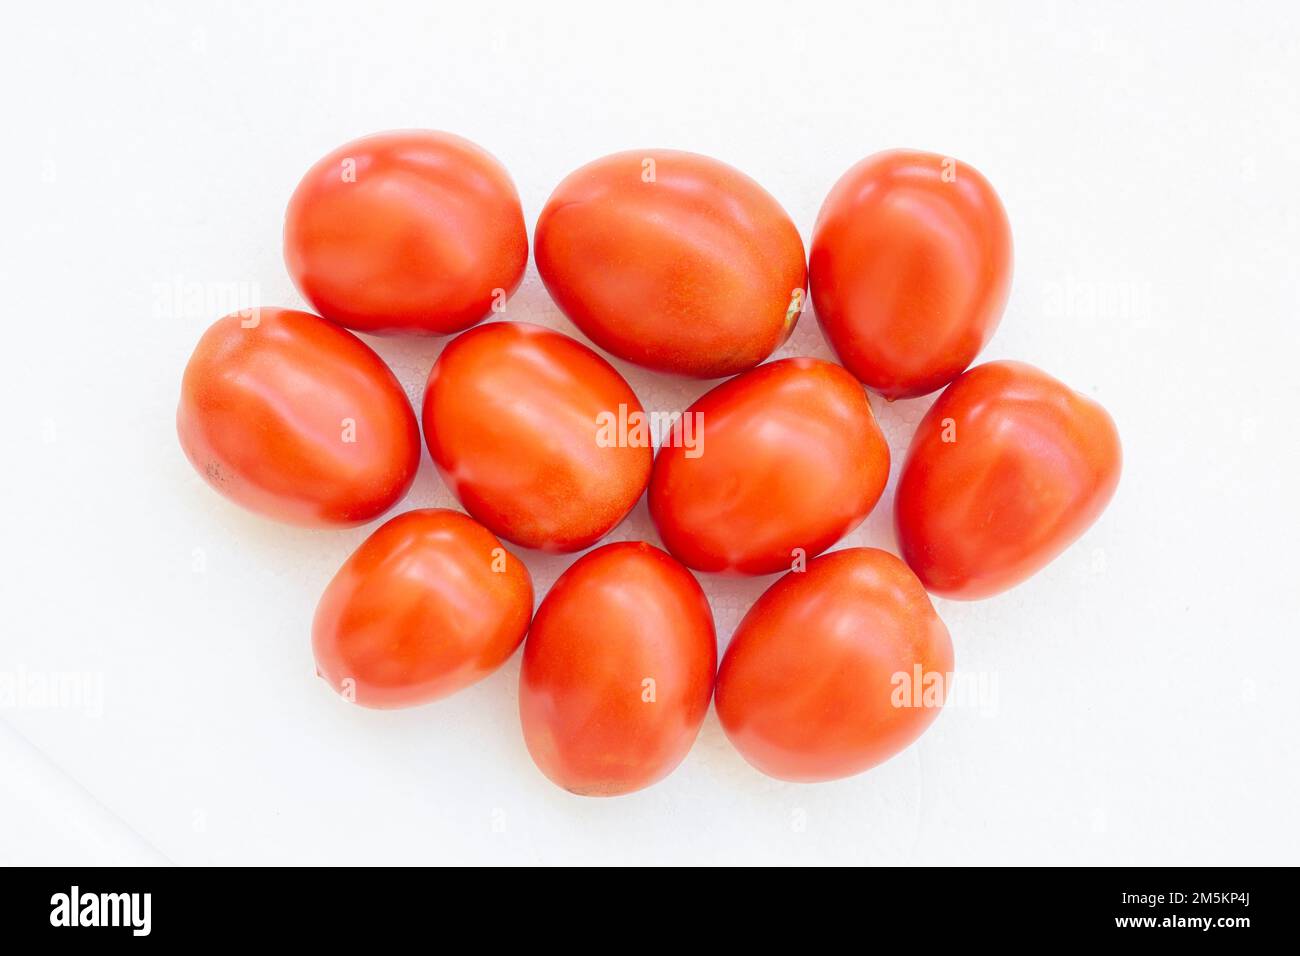 large group of ripe tomatoes isolated on white background Stock Photo